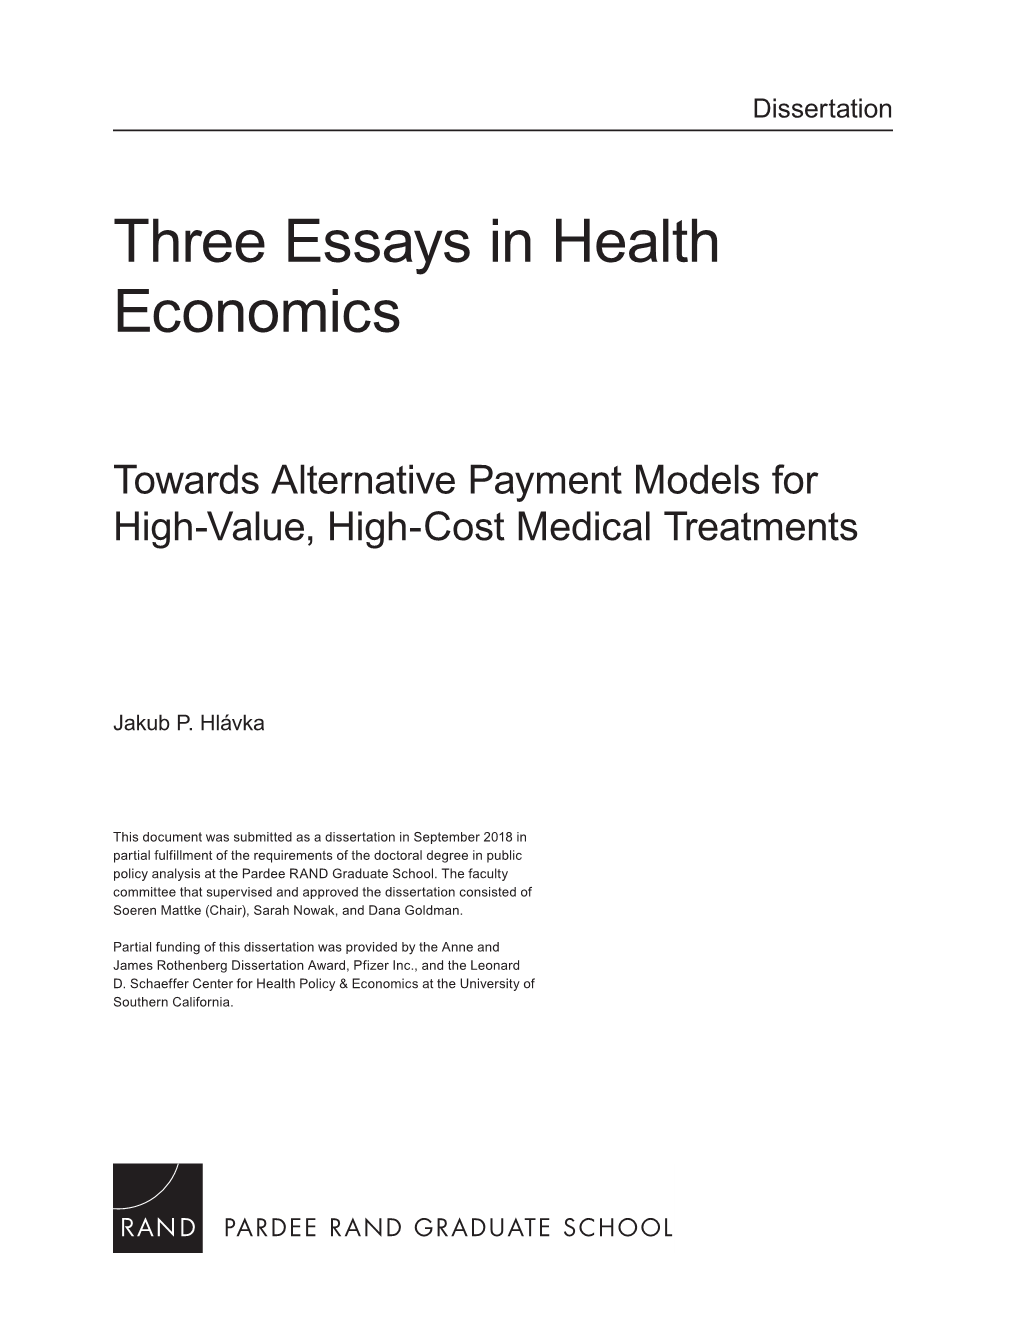 Three Essays in Health Economics